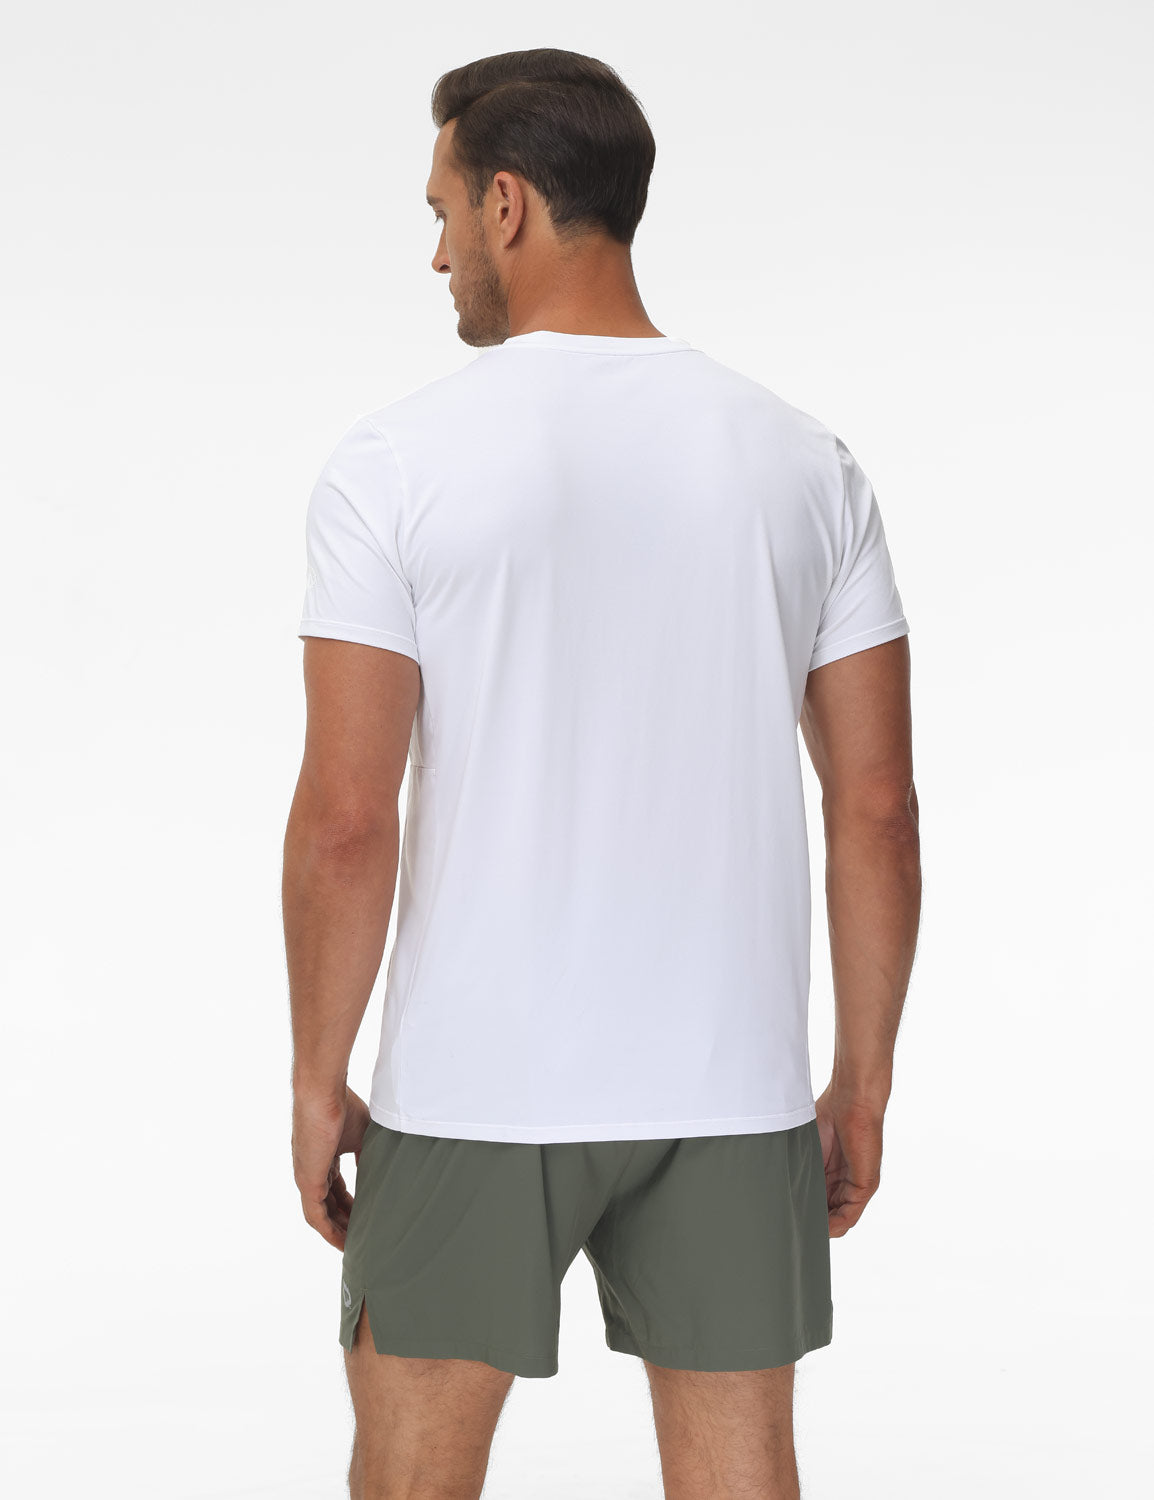 Baleaf Men's Fitted Crew Neck Short Sleeve T-shirts Lucent White Back